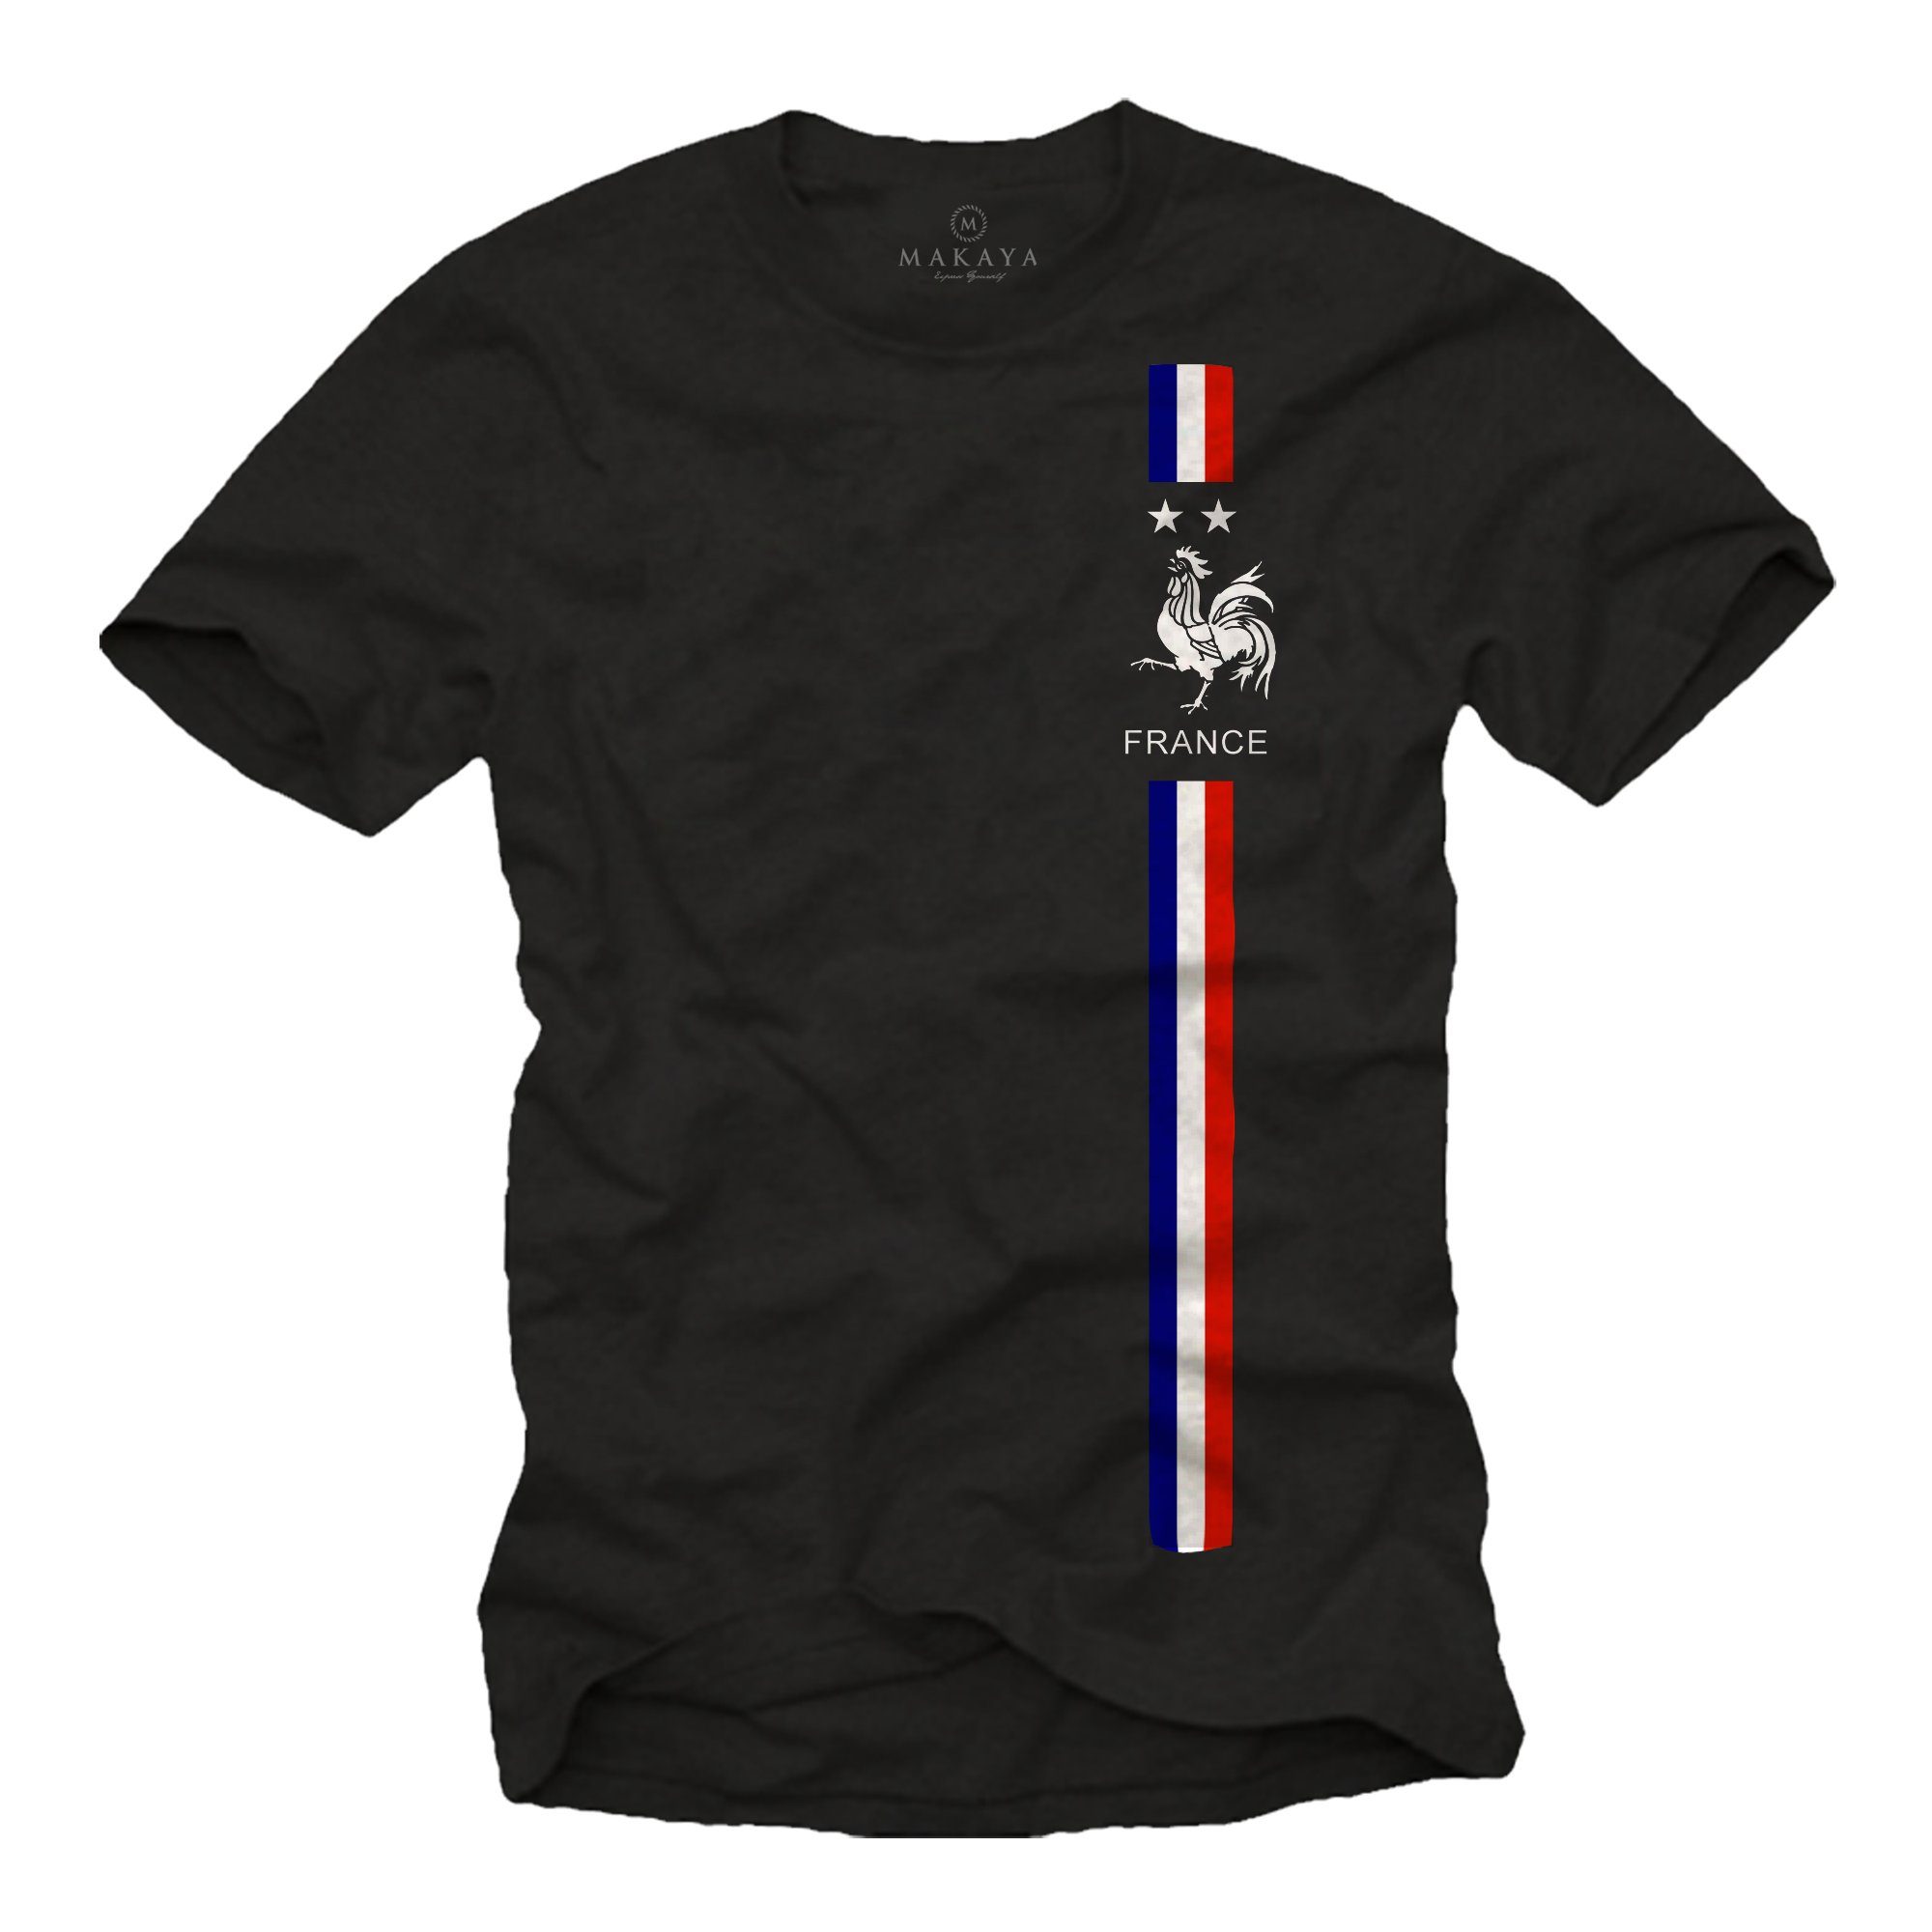 Herren Männer Frankreich Fußball Schwarz Fahne Geschenke Flagge MAKAYA Trikot Print-Shirt